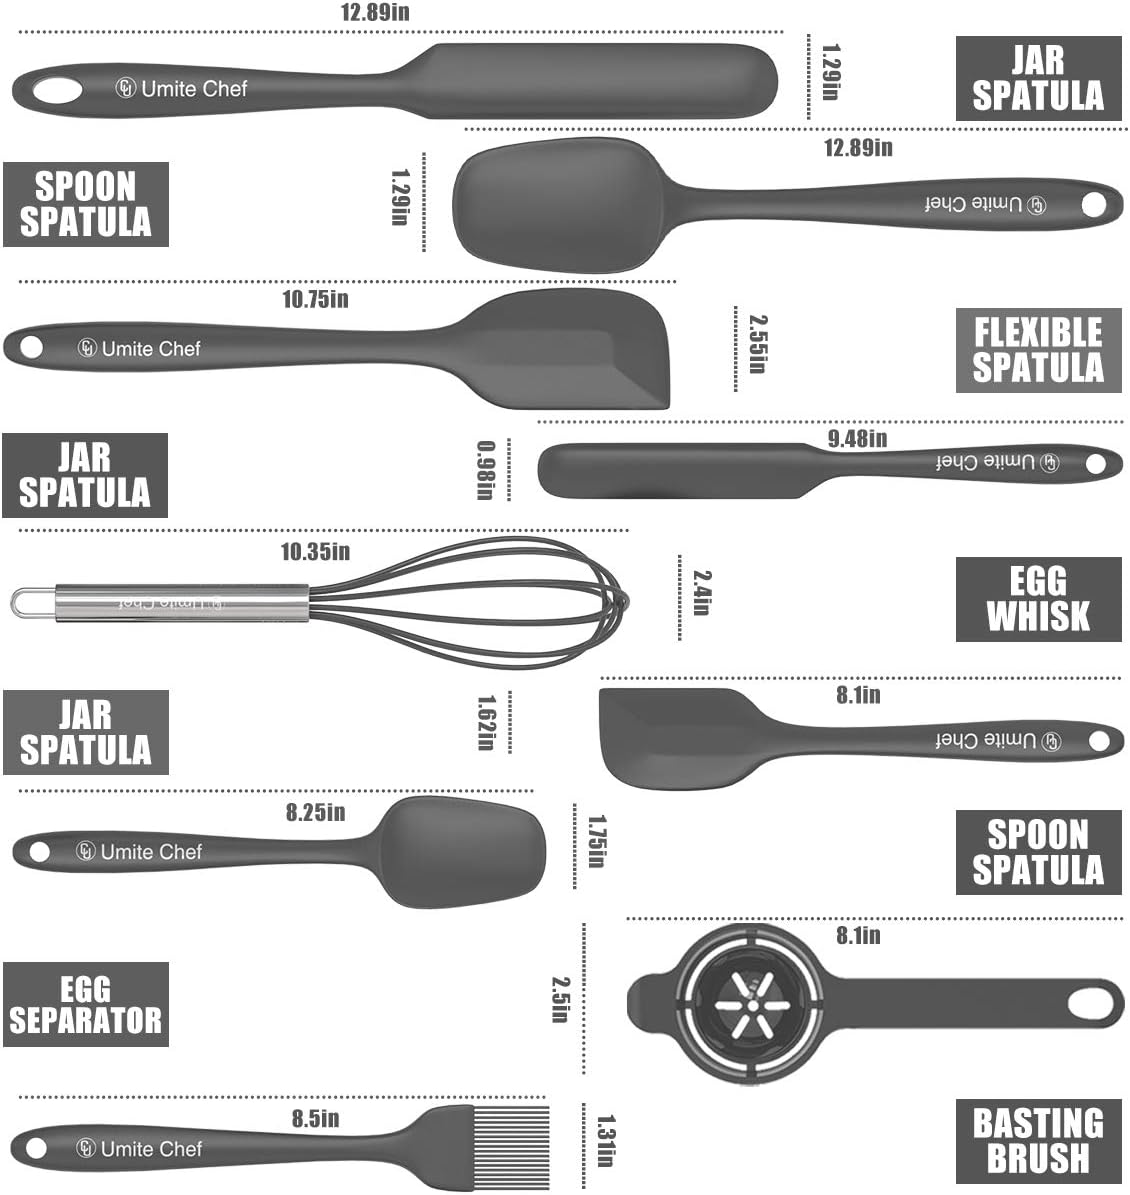 Set de herramientas para reposteria. Ideal para tu cocina